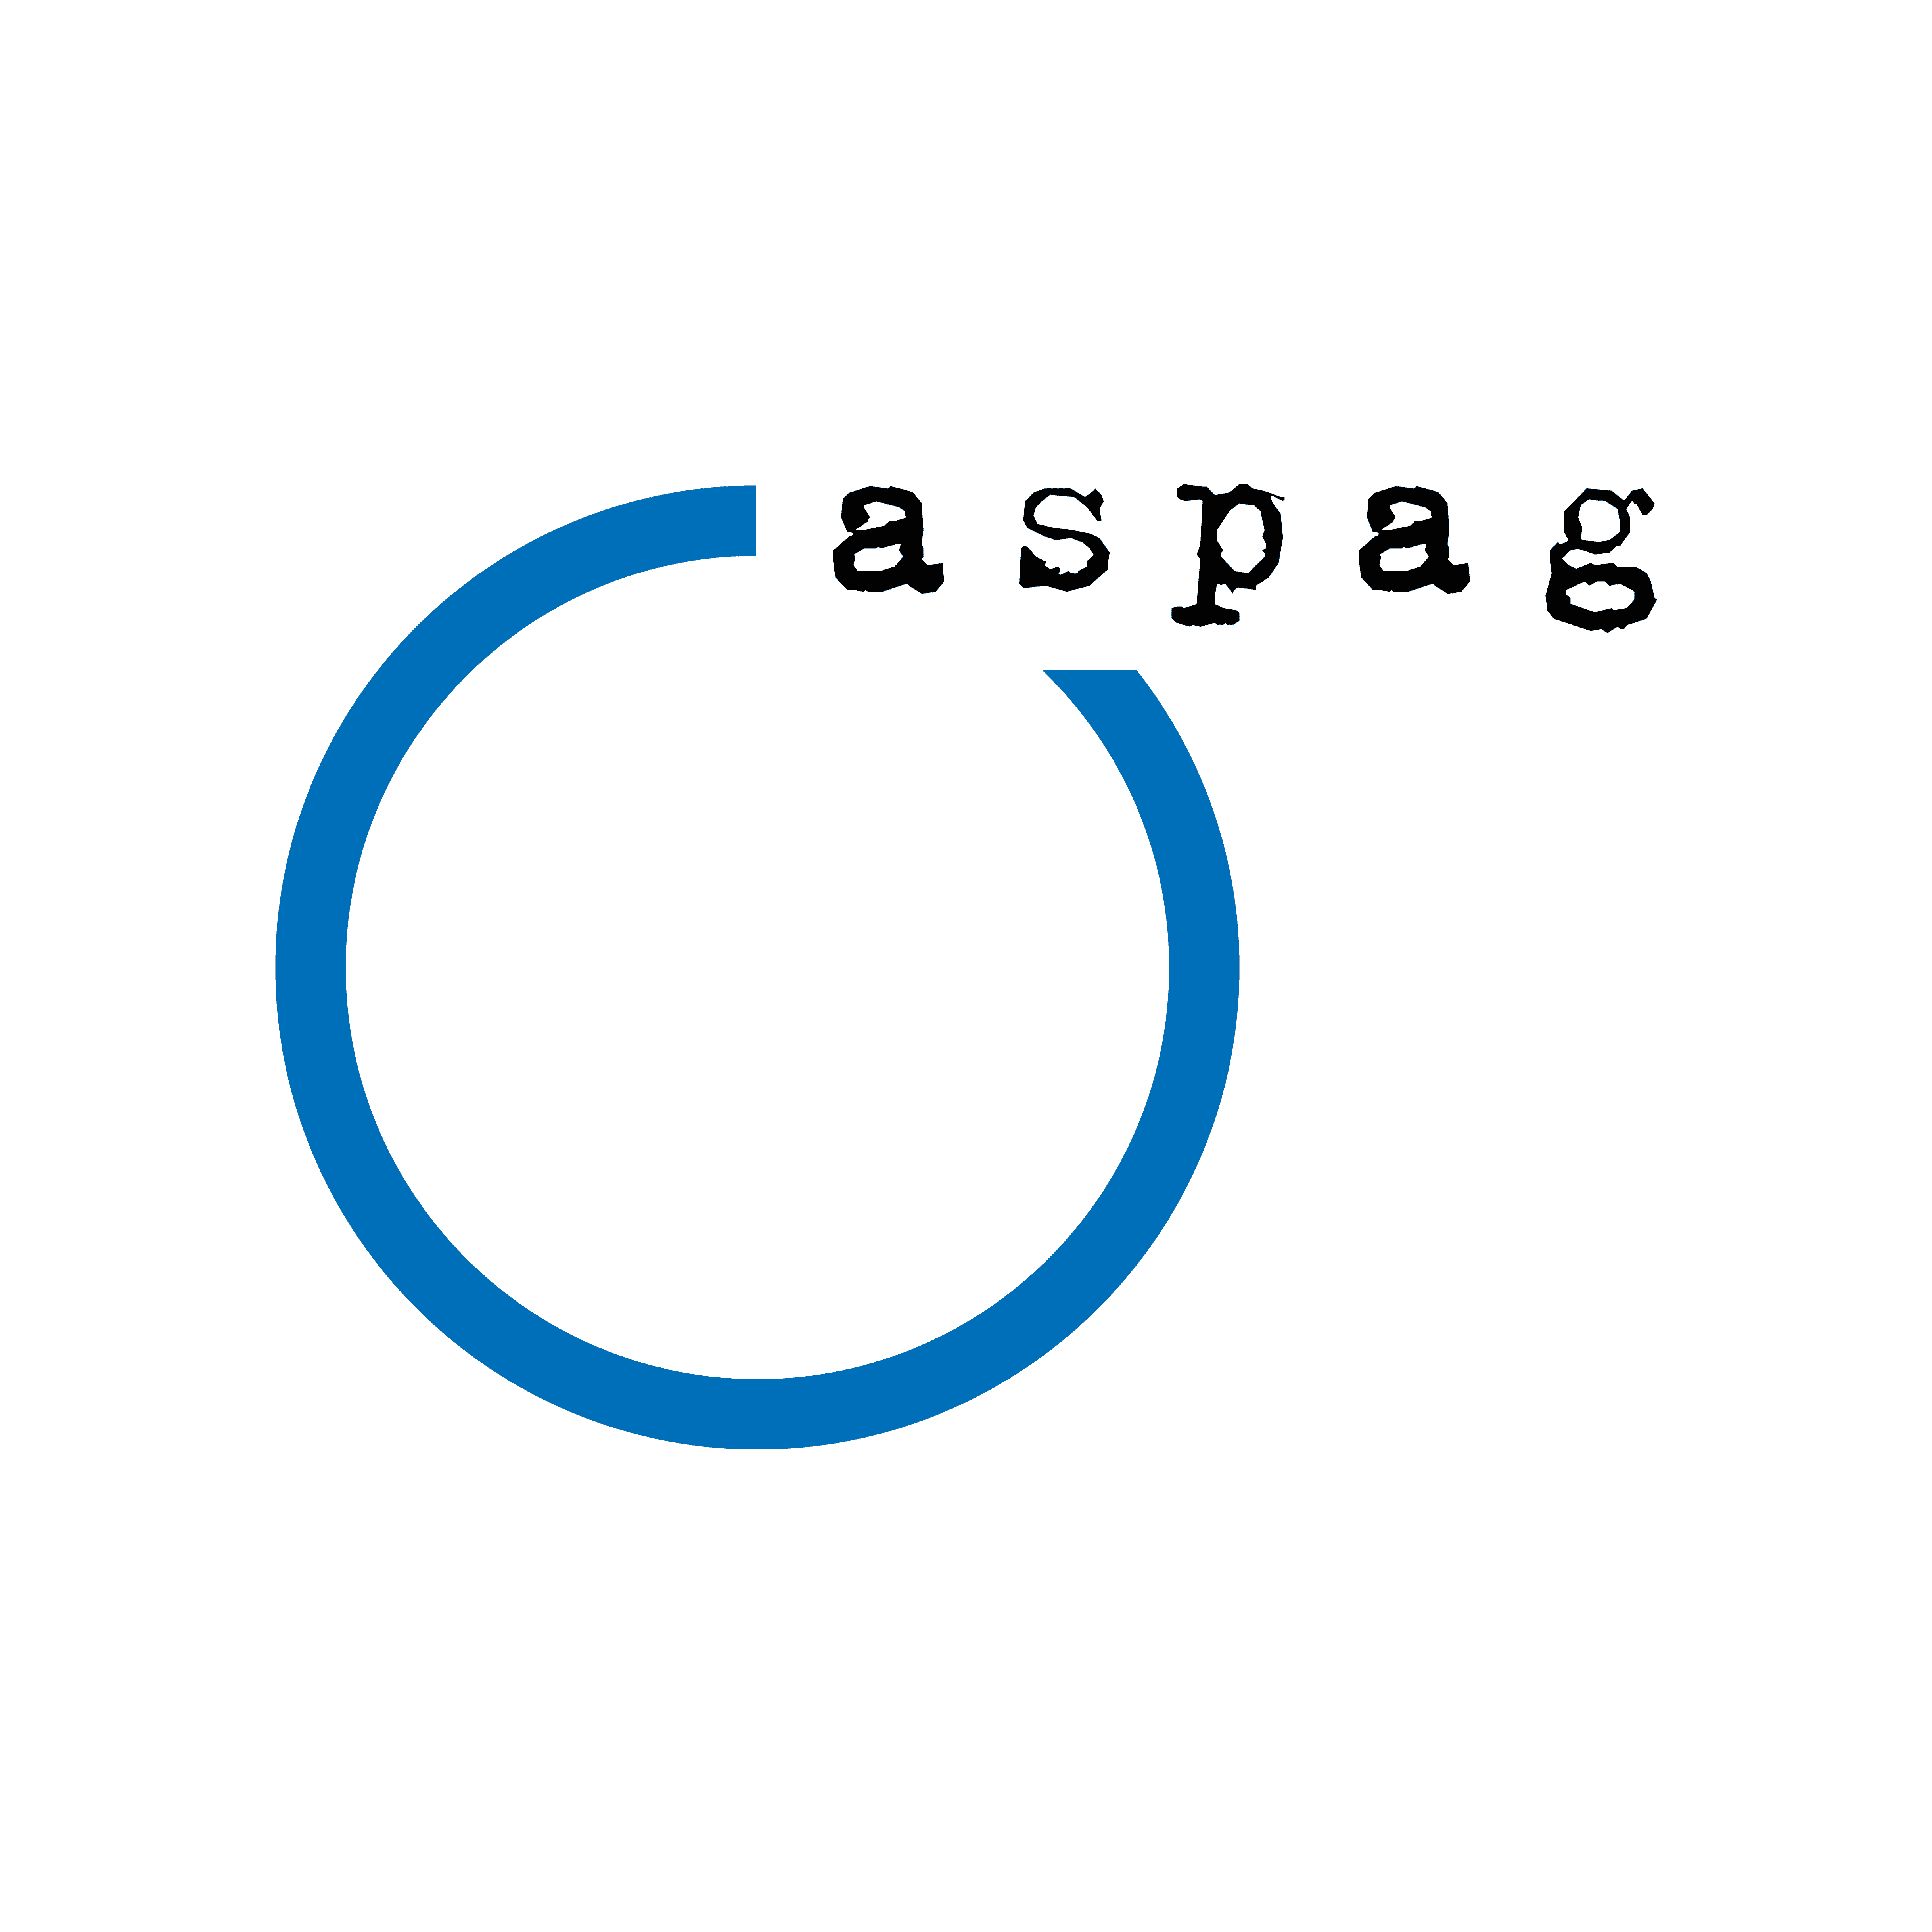 Aspag AG